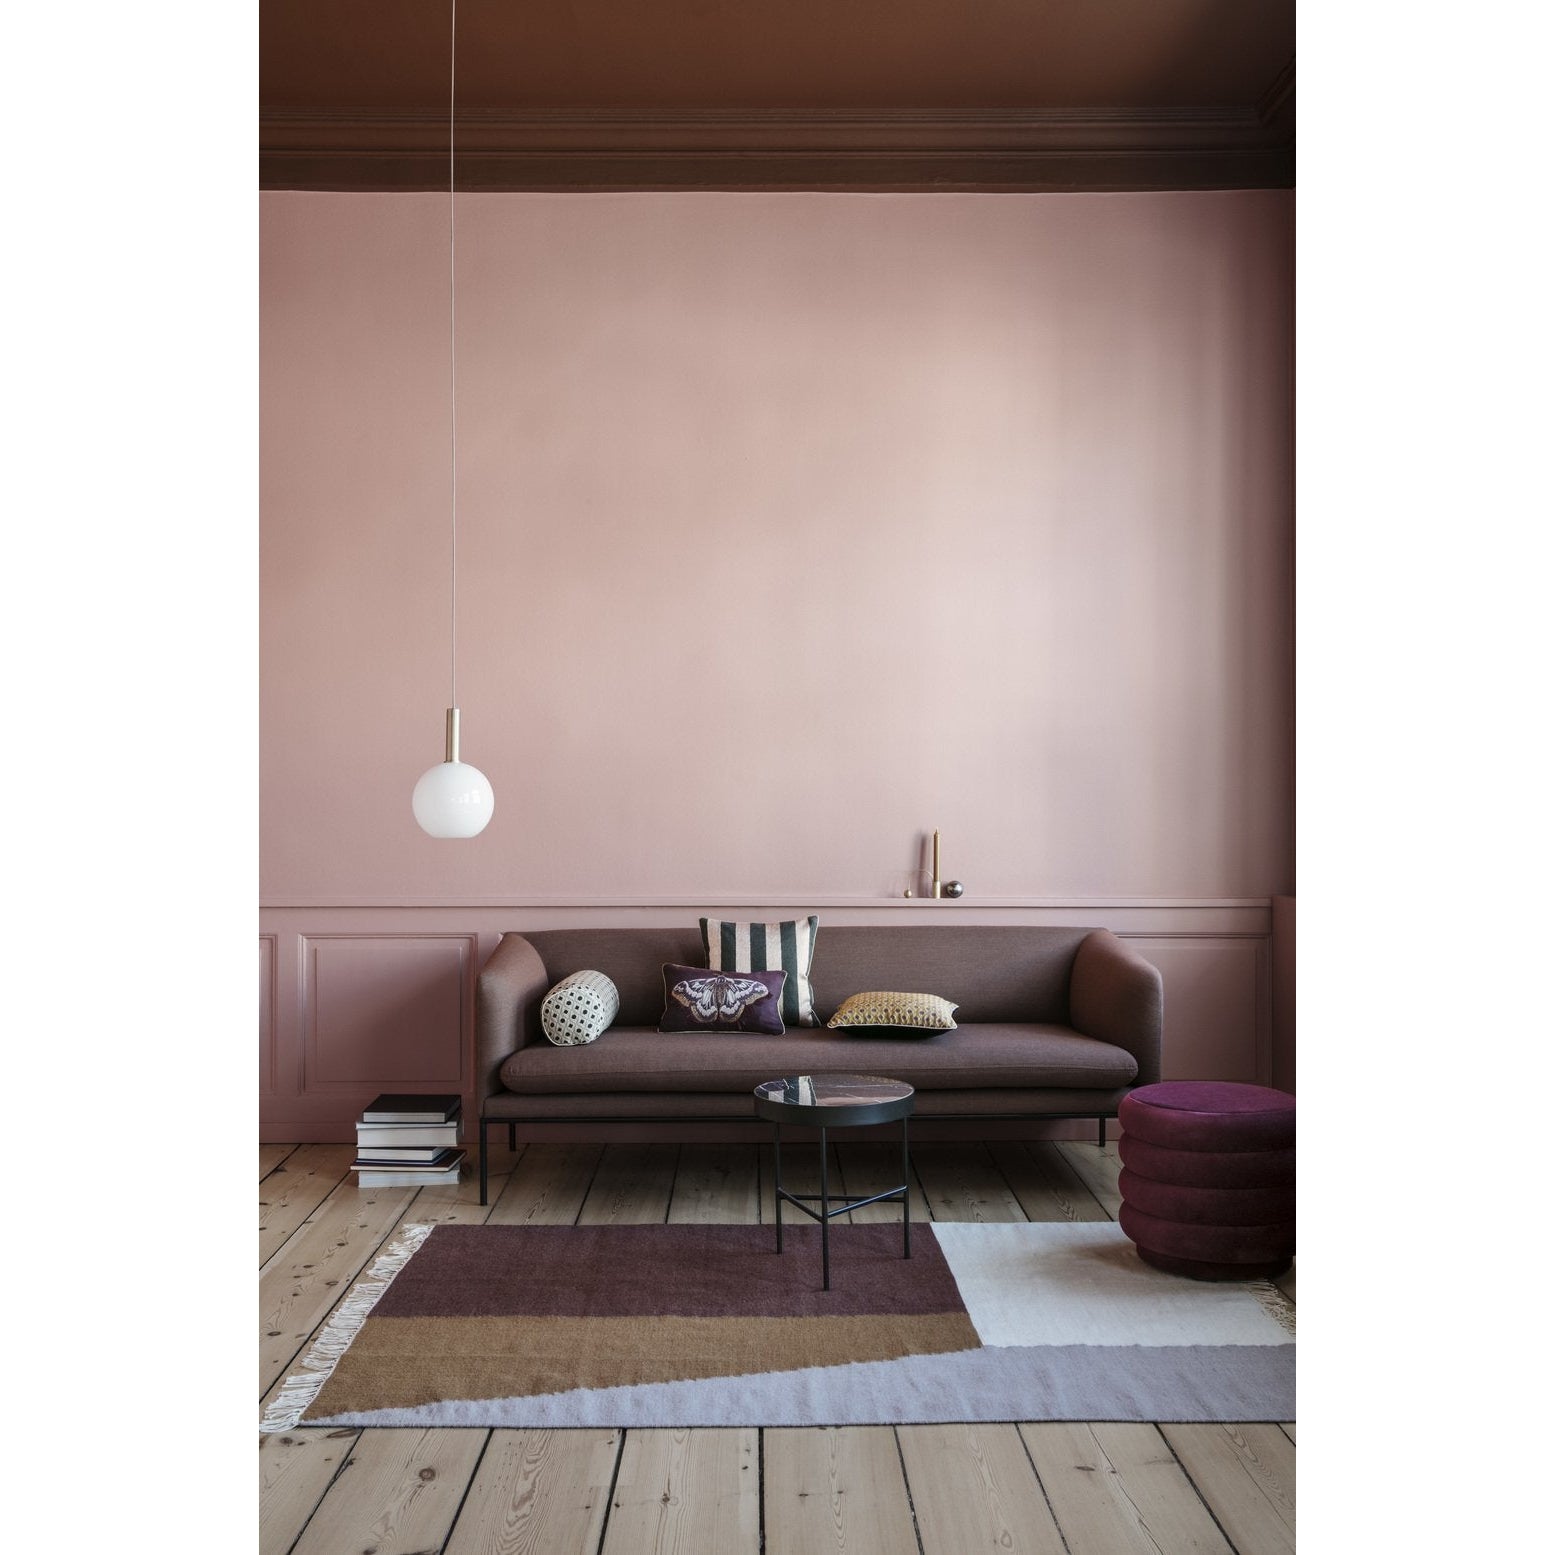 Ferm Living Turn Sofa 3 Wool, Solid Light Grey